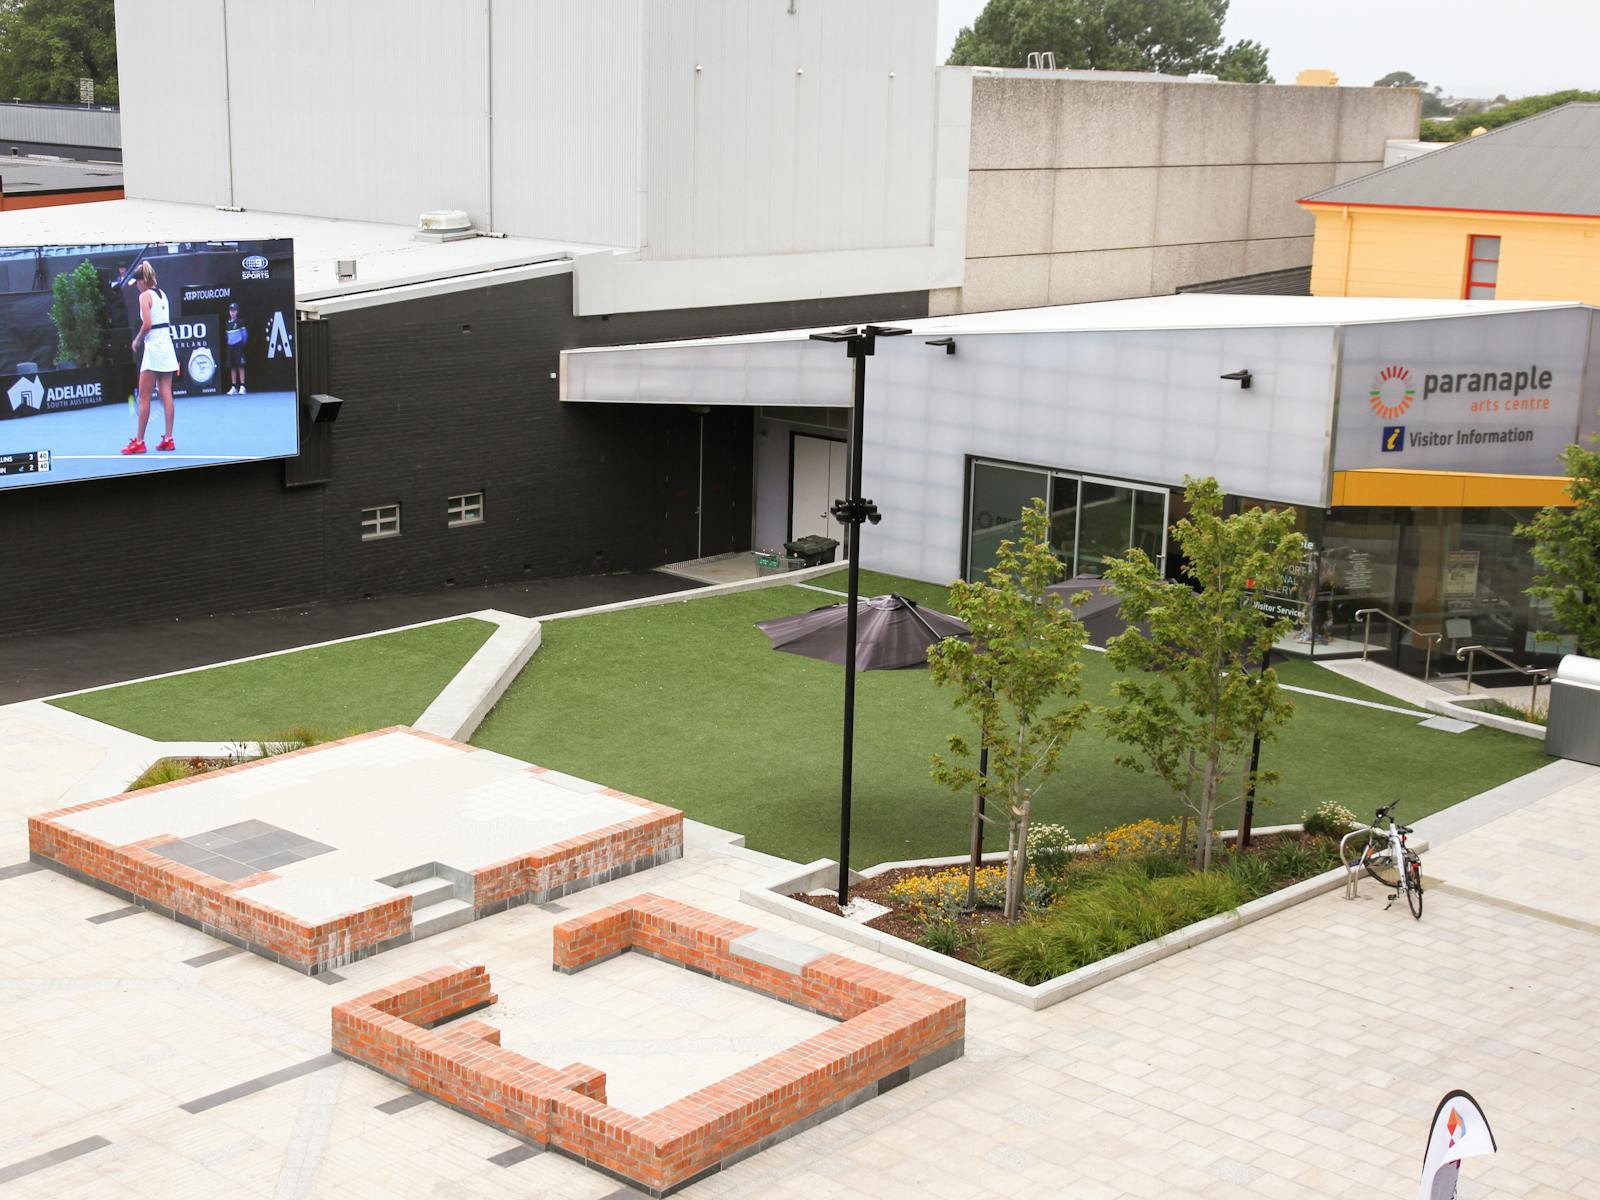 Market Square view of the paranaple arts centre